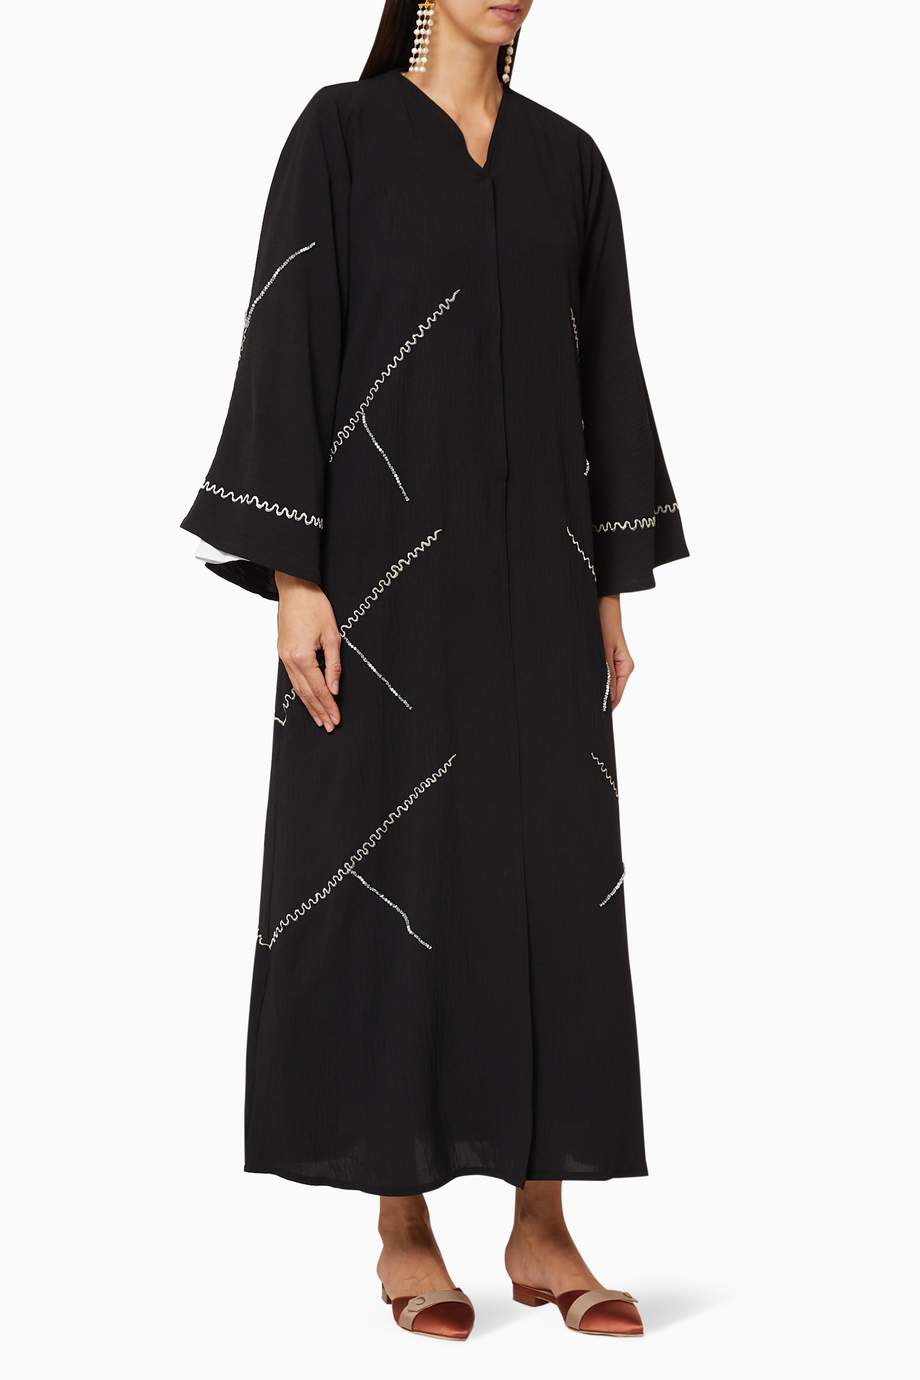 Shop Barza Black Embroidered Crinkled Crepe Abaya for Women | Ounass UAE